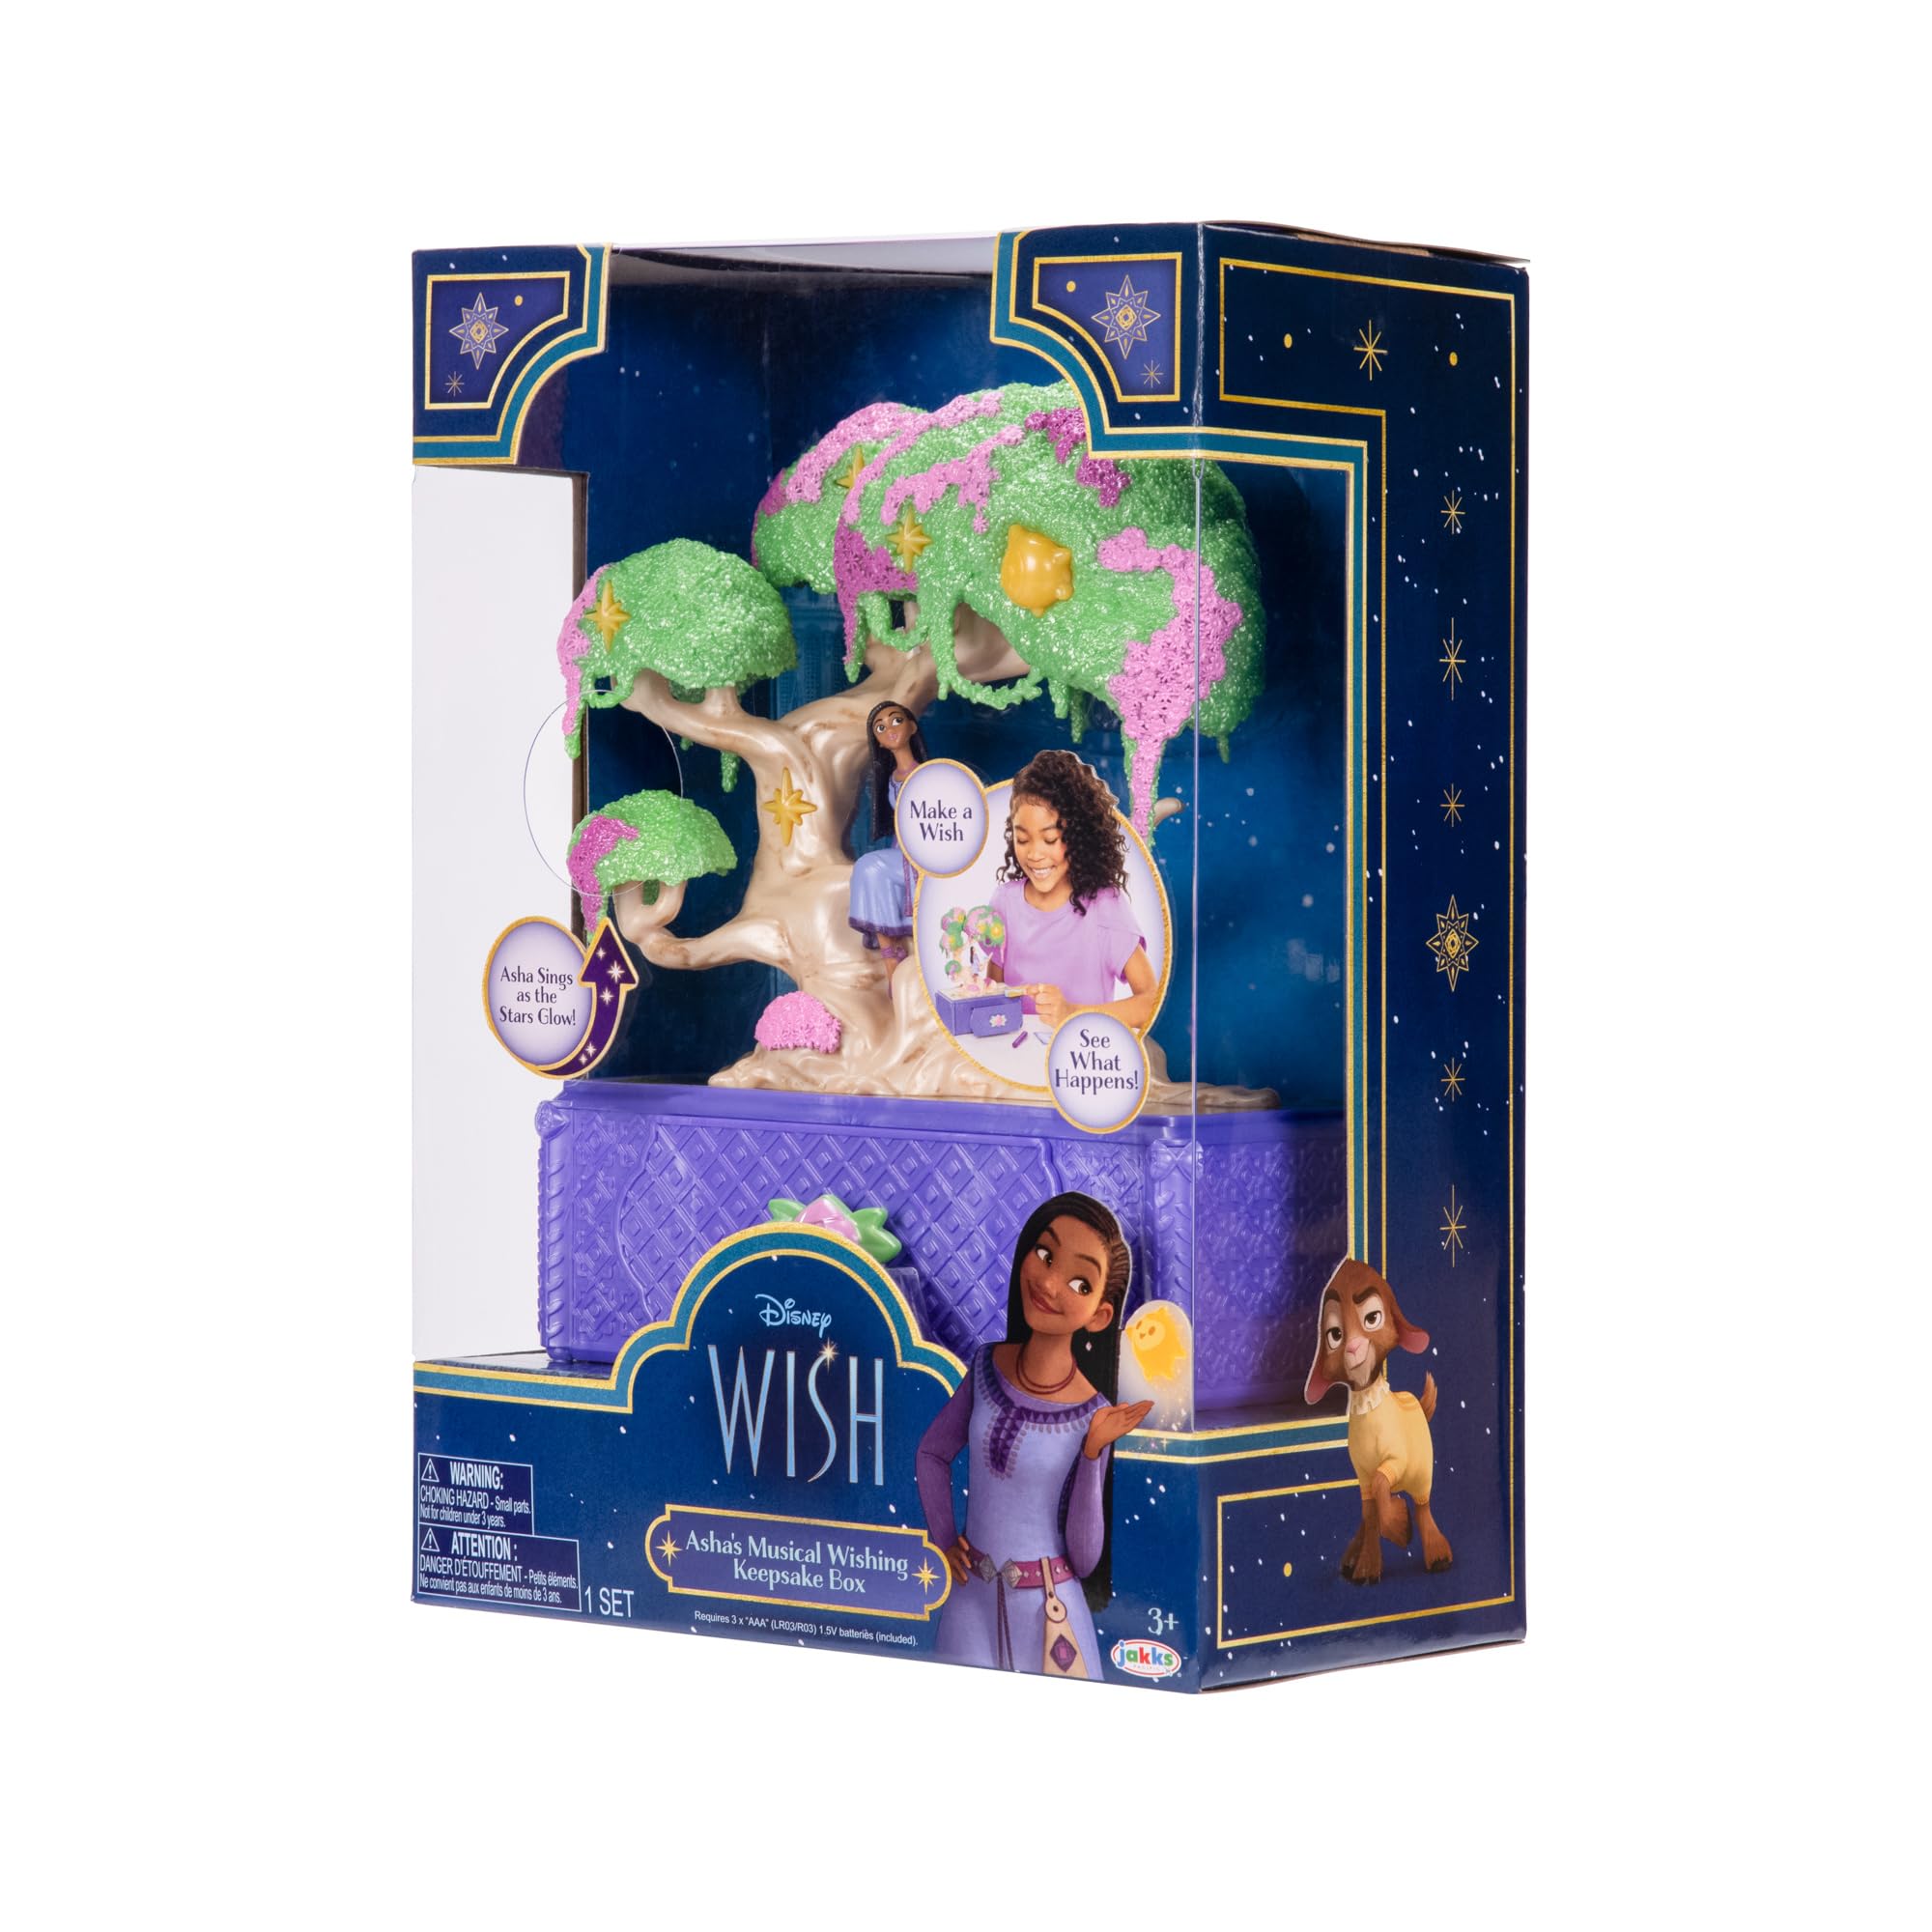 Disney's Wish Jewelry Box Asha's Wishing Tree Keepsake Musical Box with Star Toy Ring